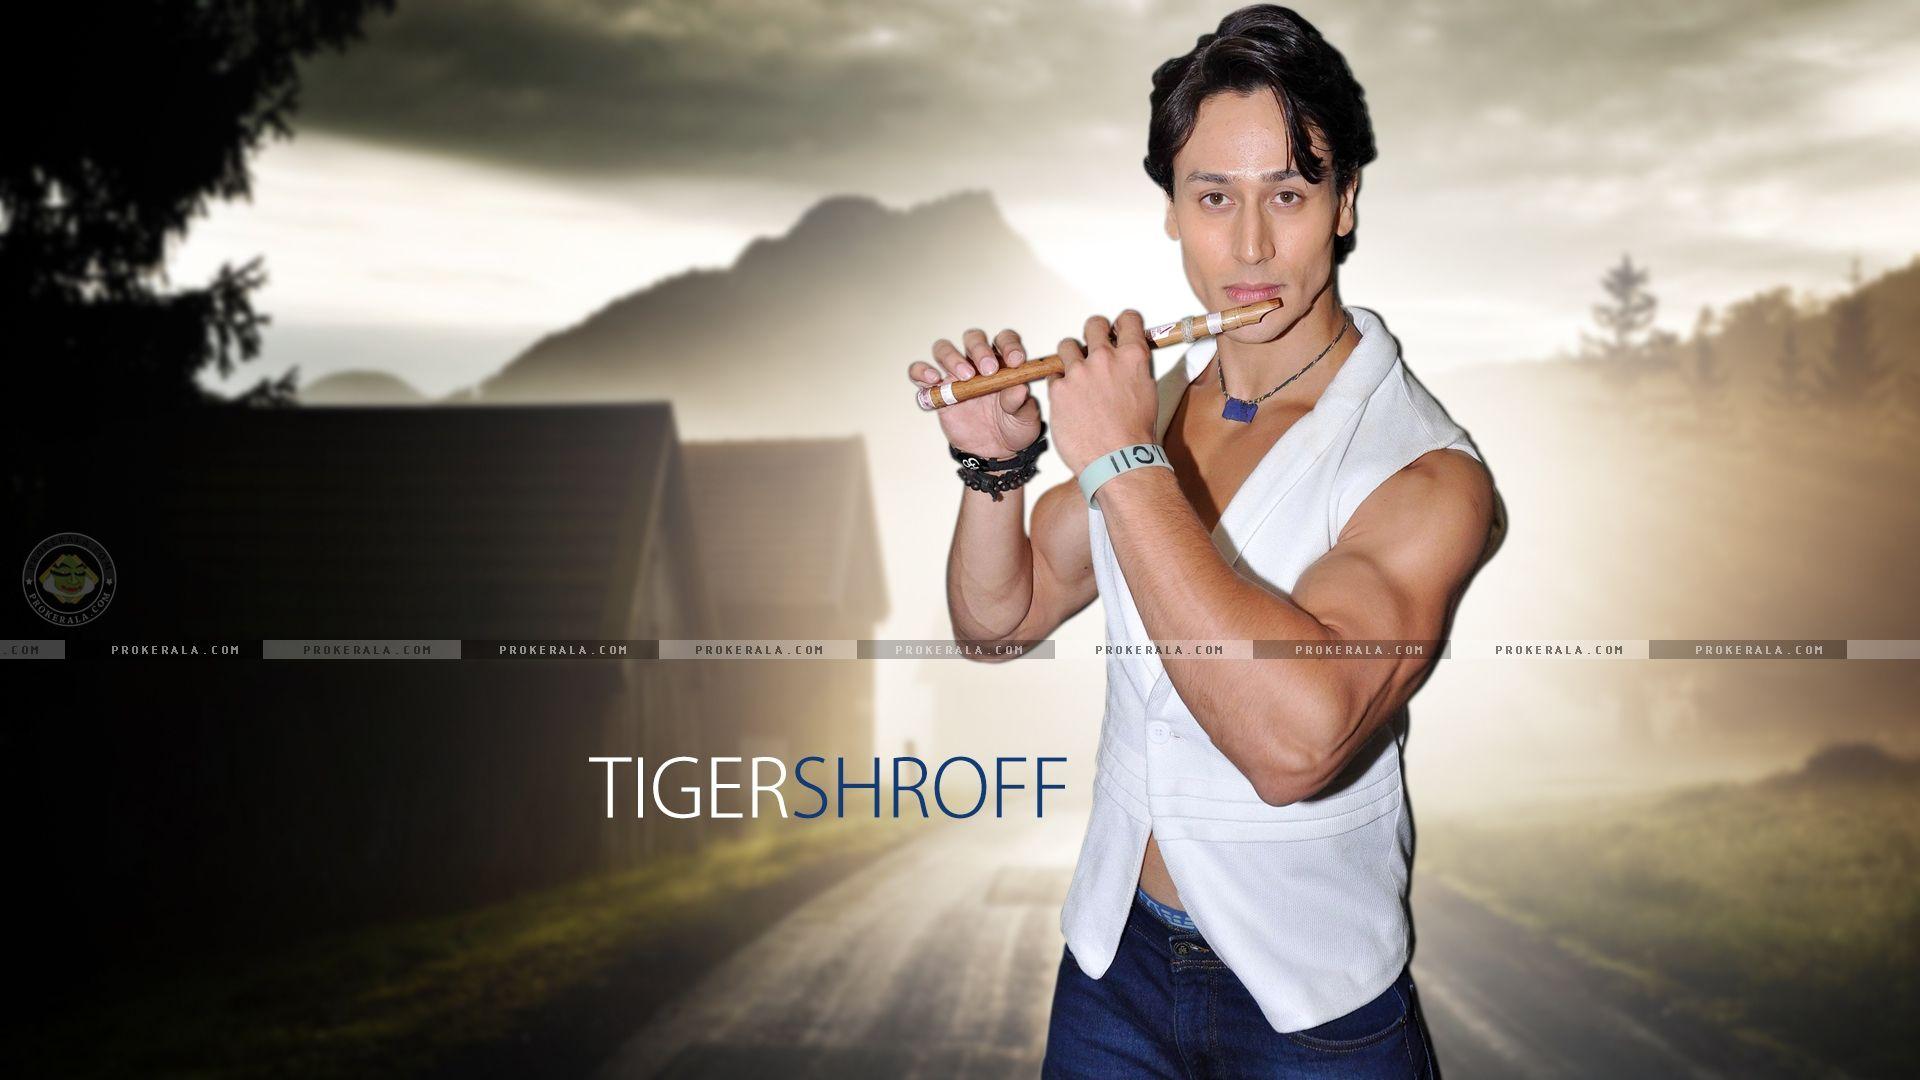 Tiger Shroff HD Wallpaper for download